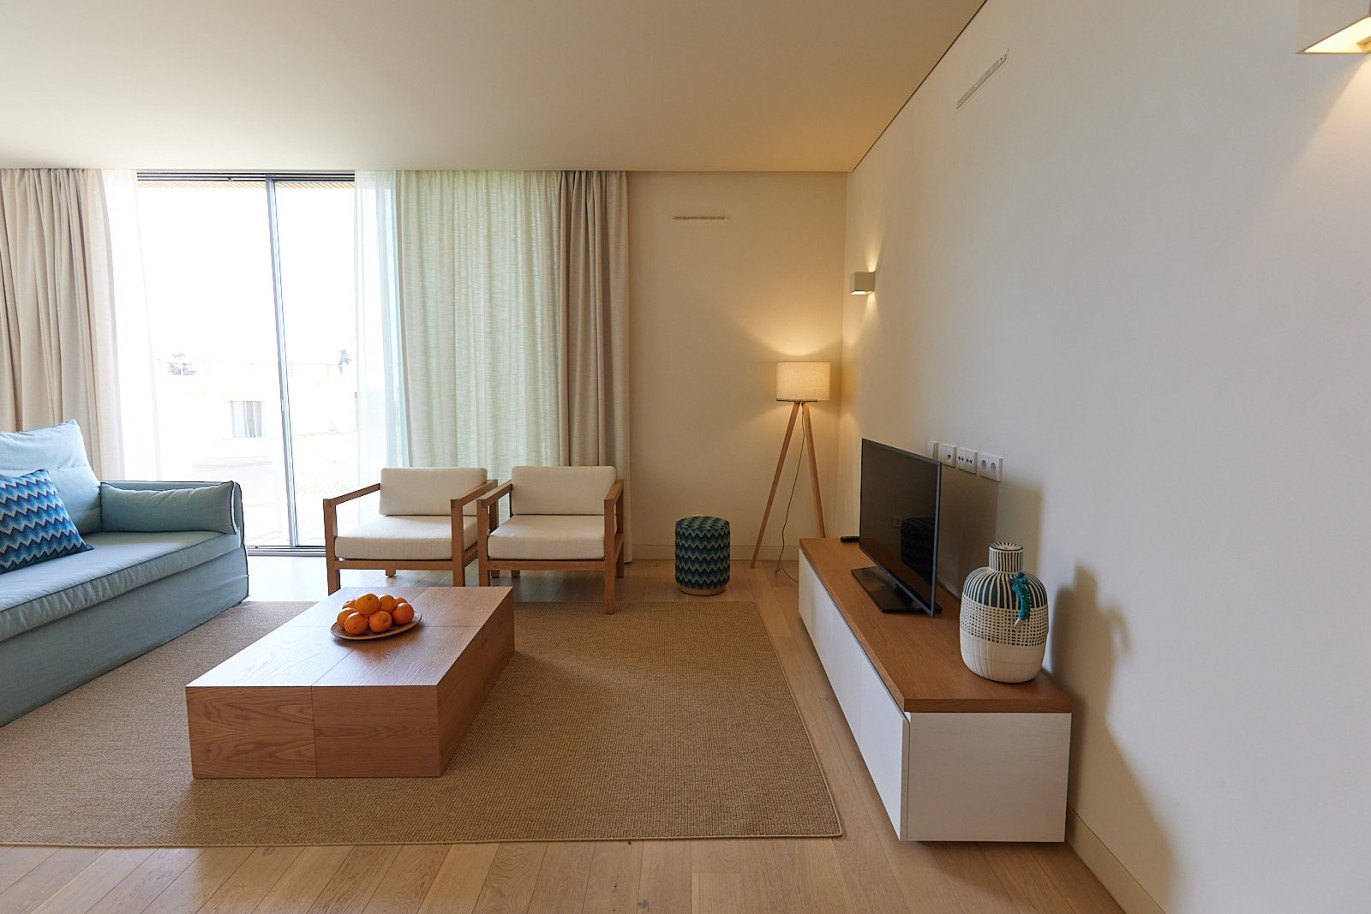 3 bedroom apartment in resort, for sale in Porches, Algarve_230720